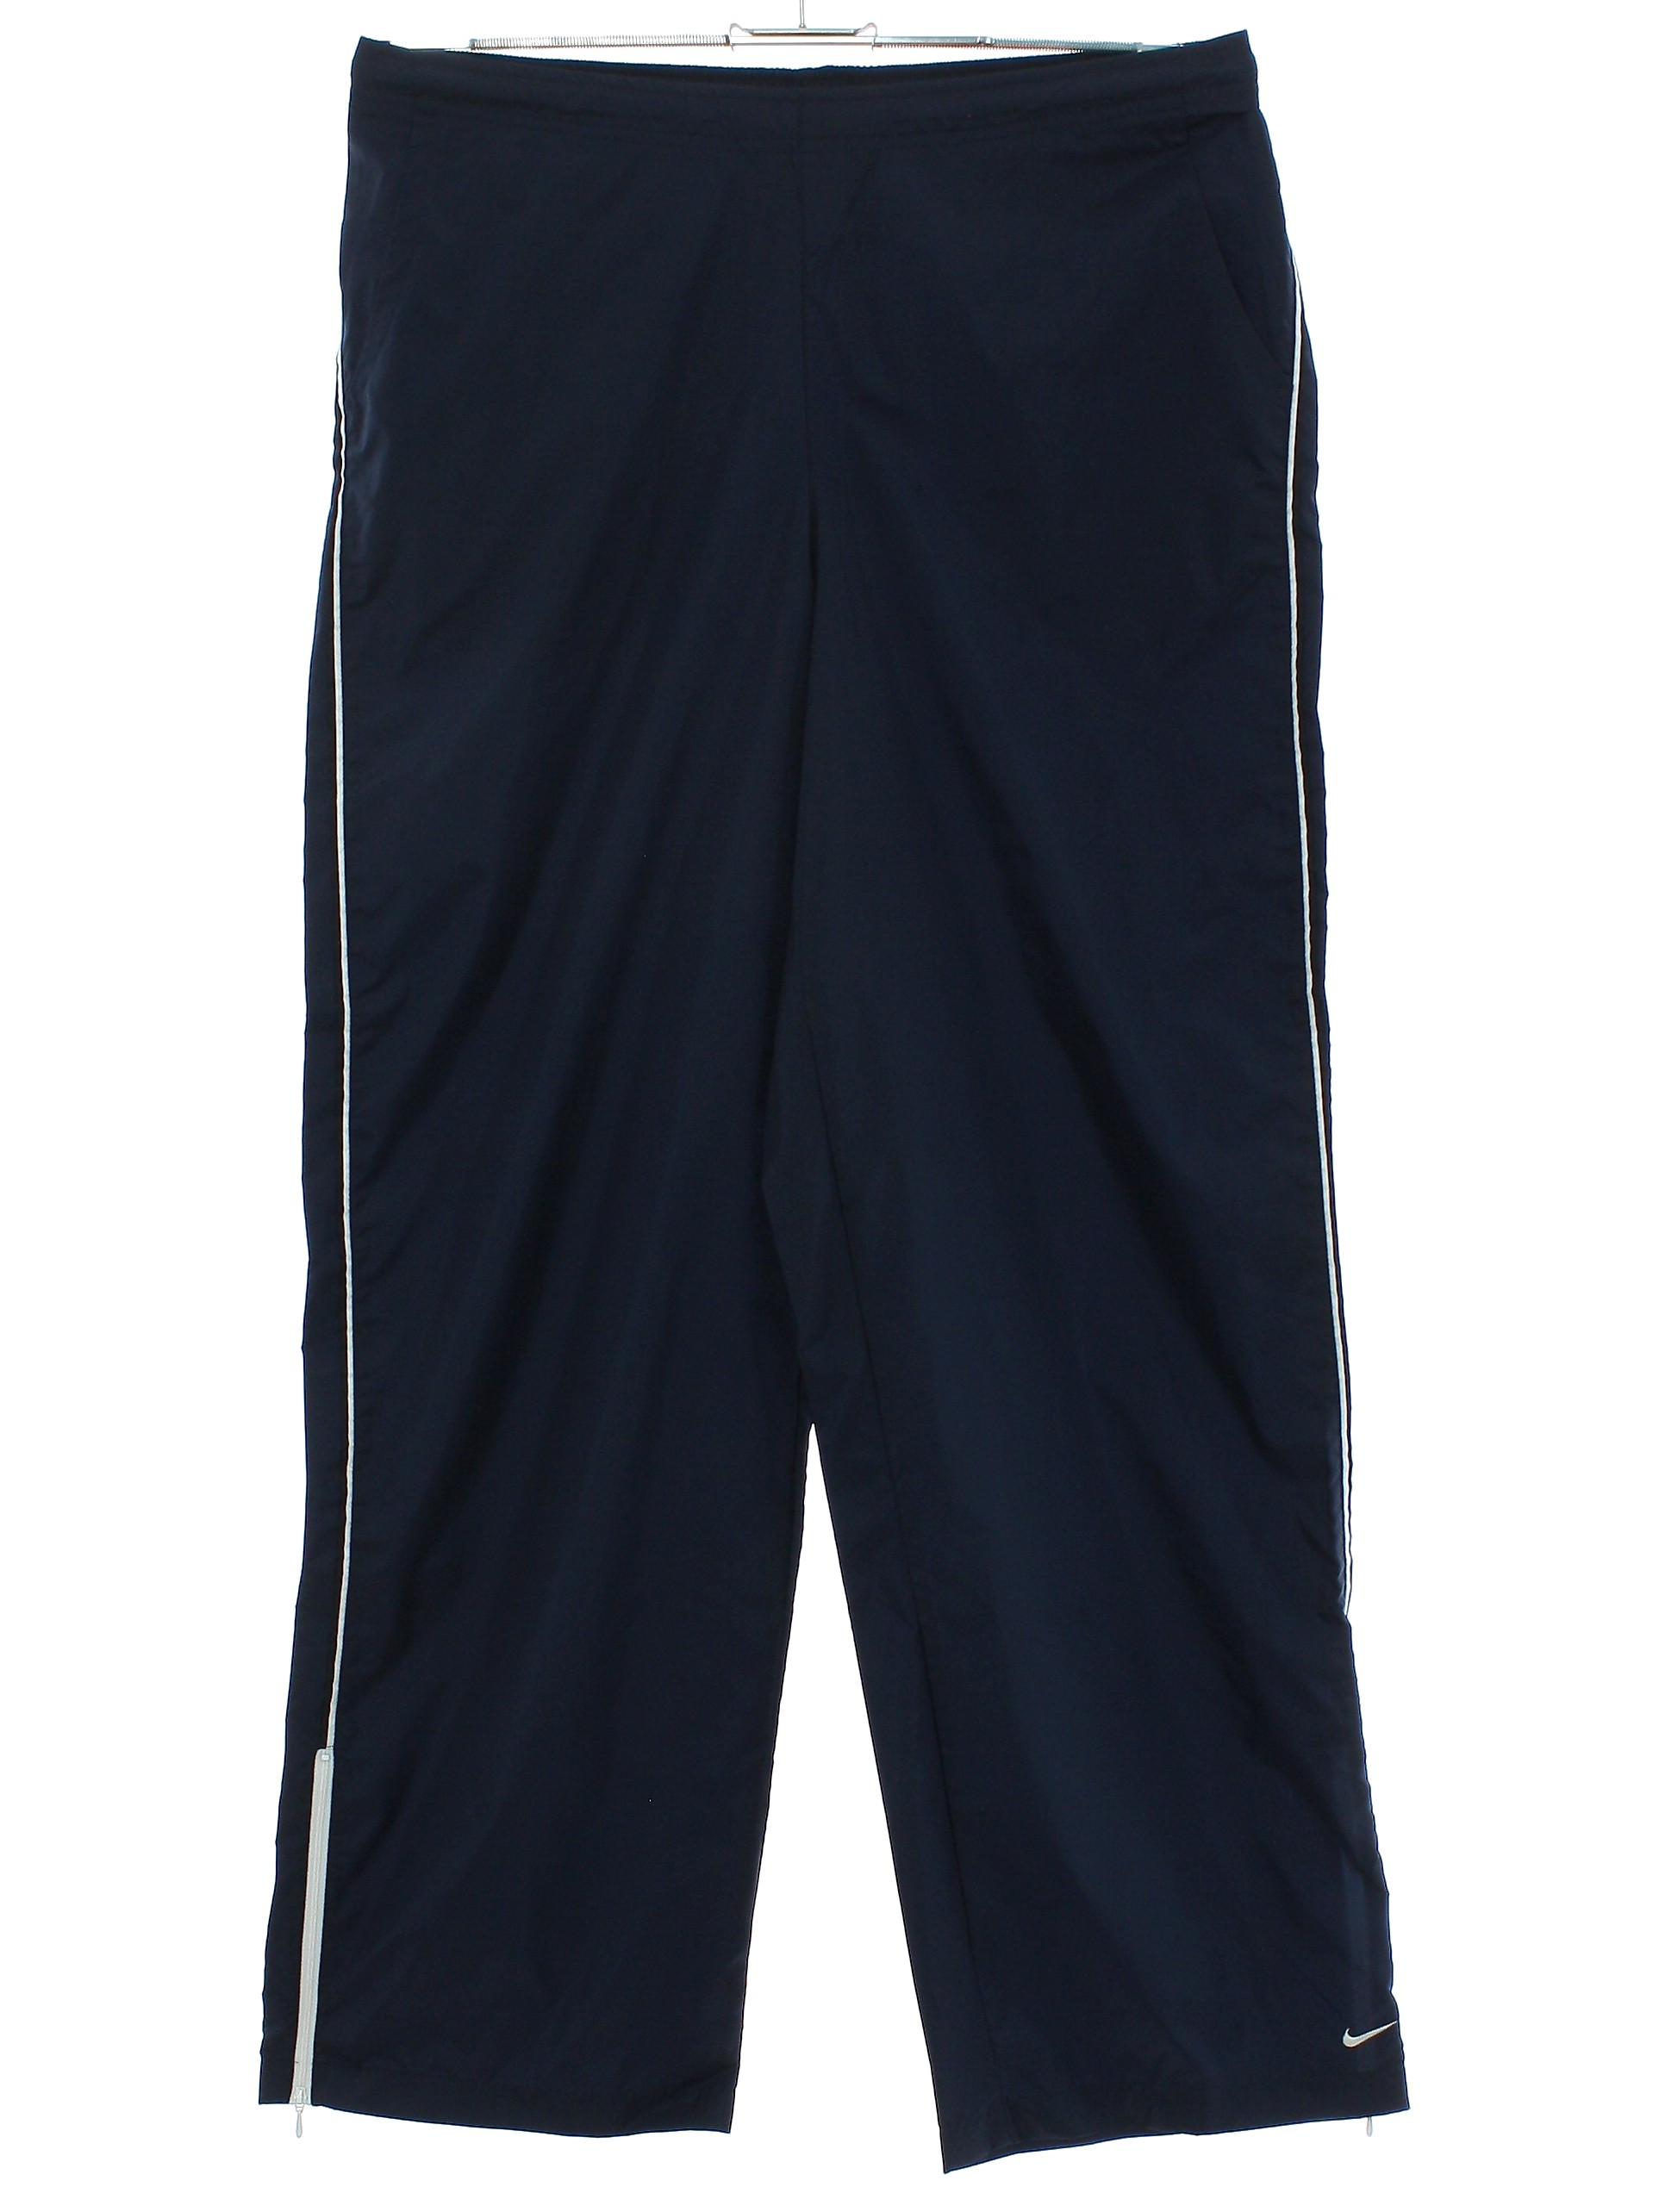 Pants: 90s (early 2000s) -Nike- Mens navy blue and white nylon taffeta ...